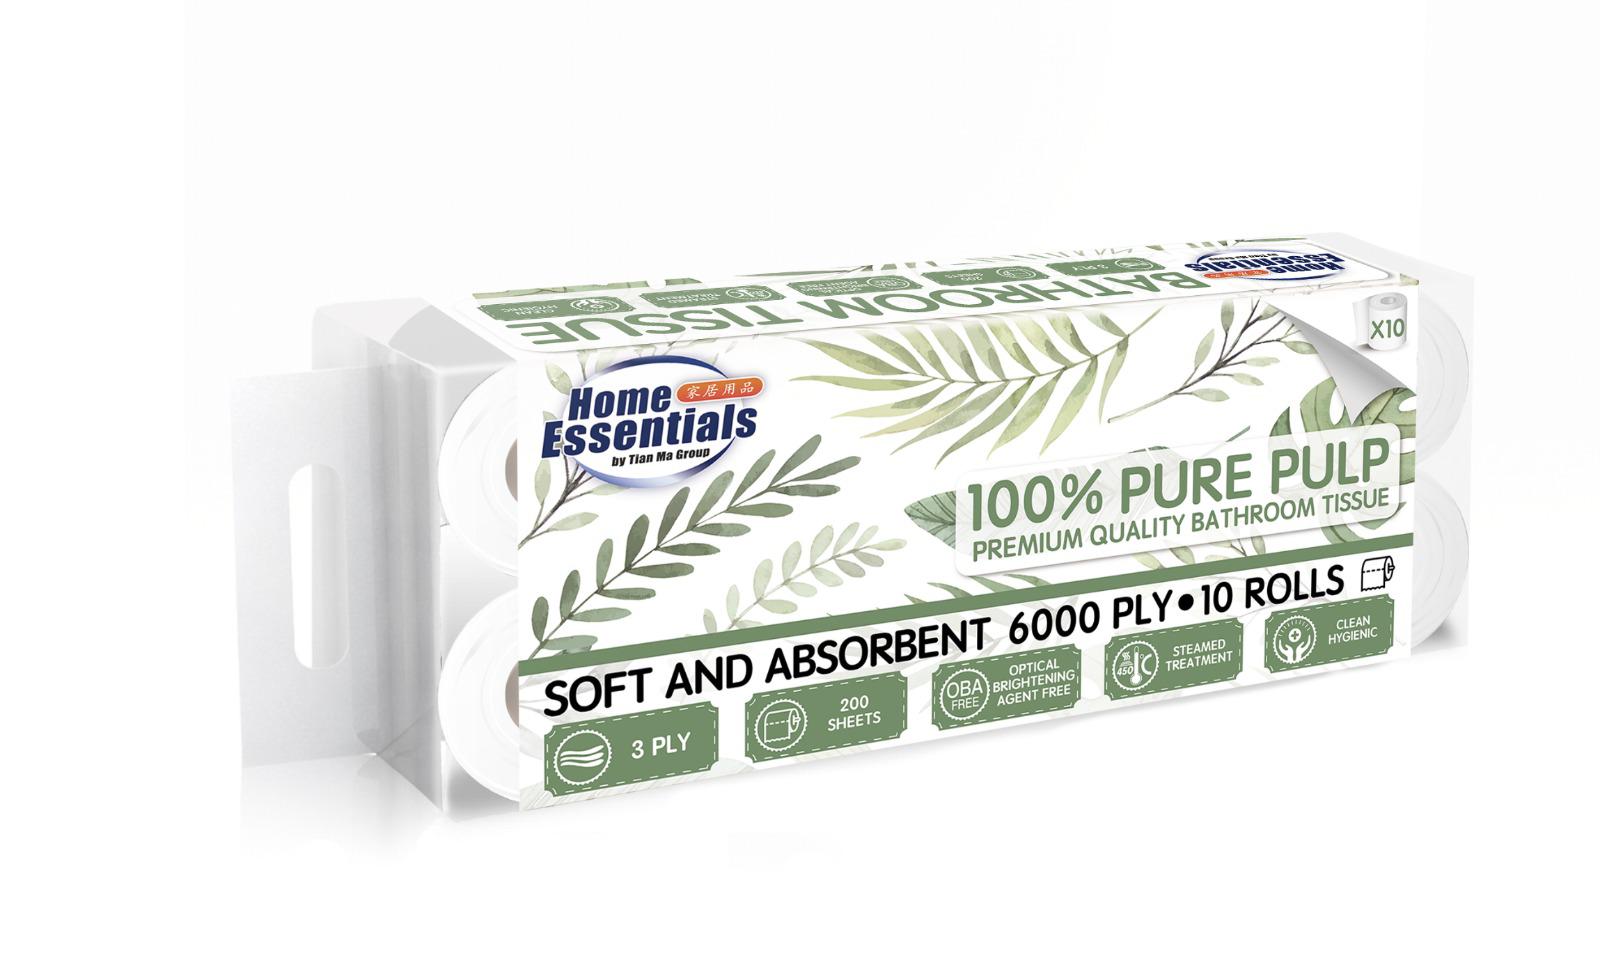 Home Essentials 3Ply|10 Rolls|6000Ply 100% Pure Pulp Premium Quality Bathroom Tissue (1.2kg – Pack)